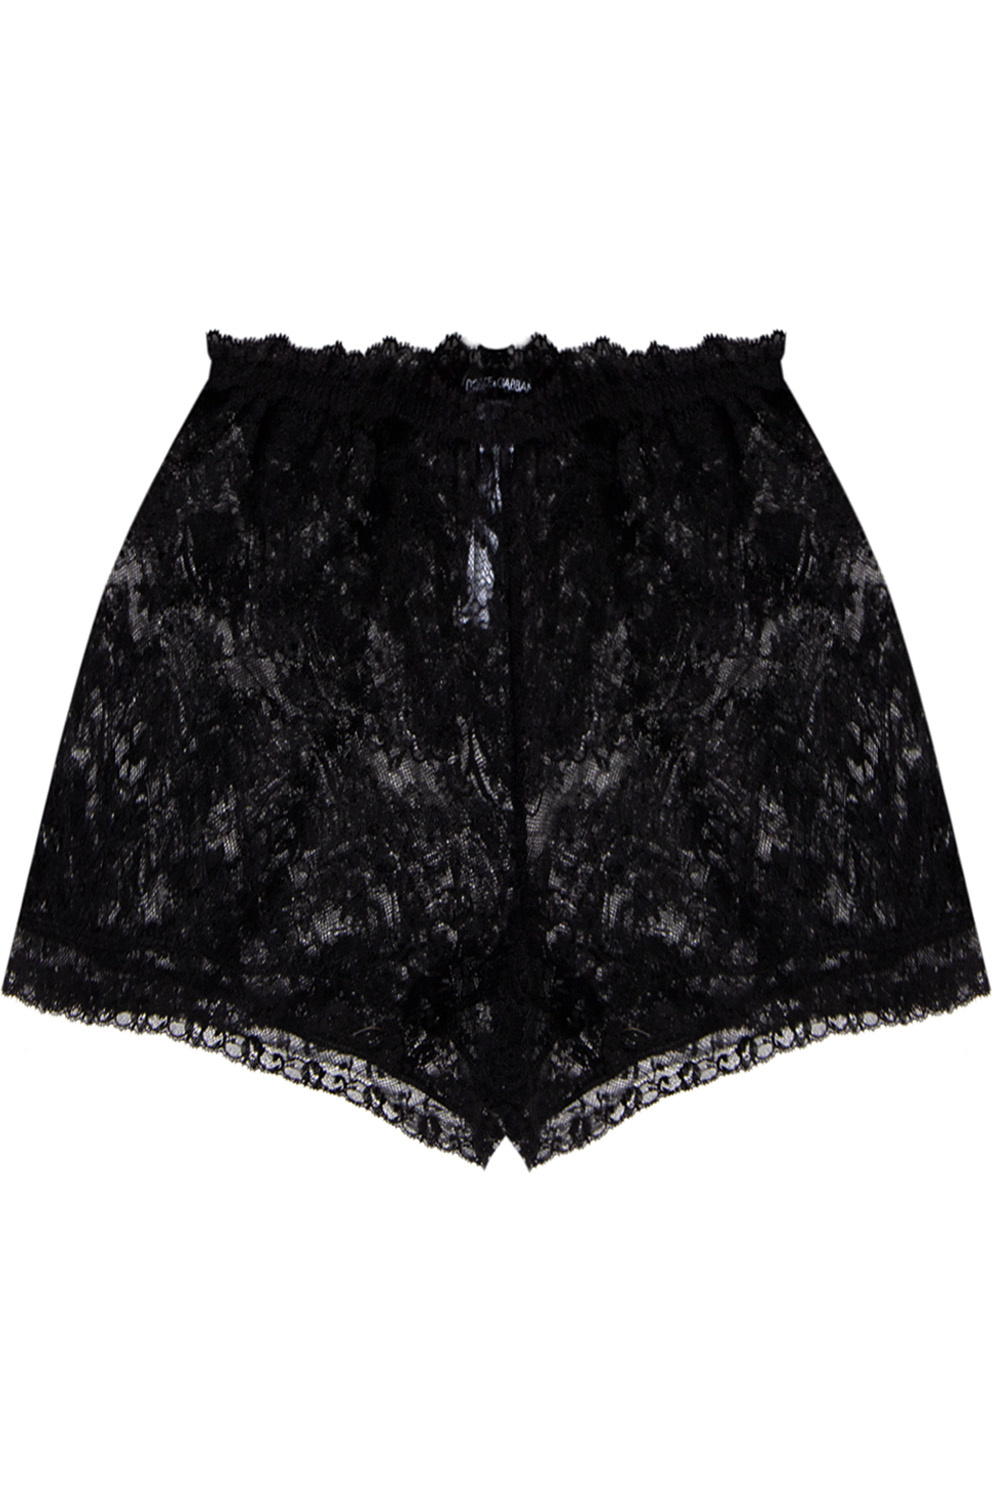 Dolce & Gabbana Lace Shorts in Black Womens Clothing Shorts Mini shorts 